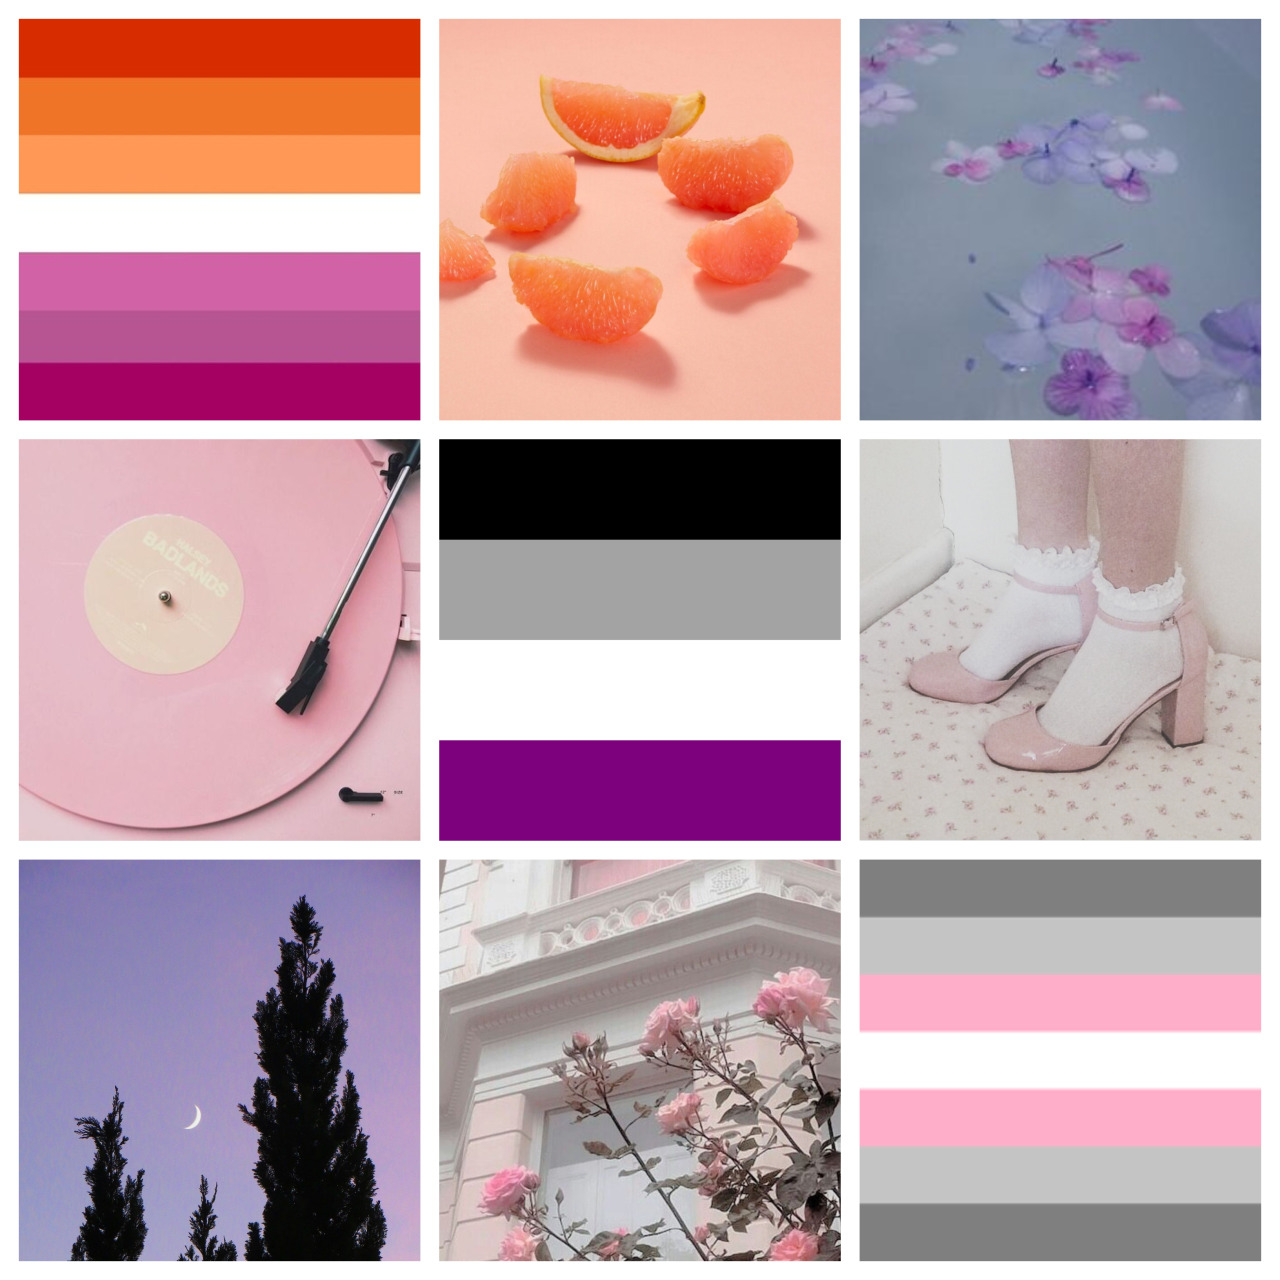 Pastel asexual lesbian demigirl moodboard for @can-of-pringles #lgbt#lgbtq#lgbtqia#aesthetic#moodboard#mood board#ace#asexual#lesbian#demigirl#demi girl#pastel